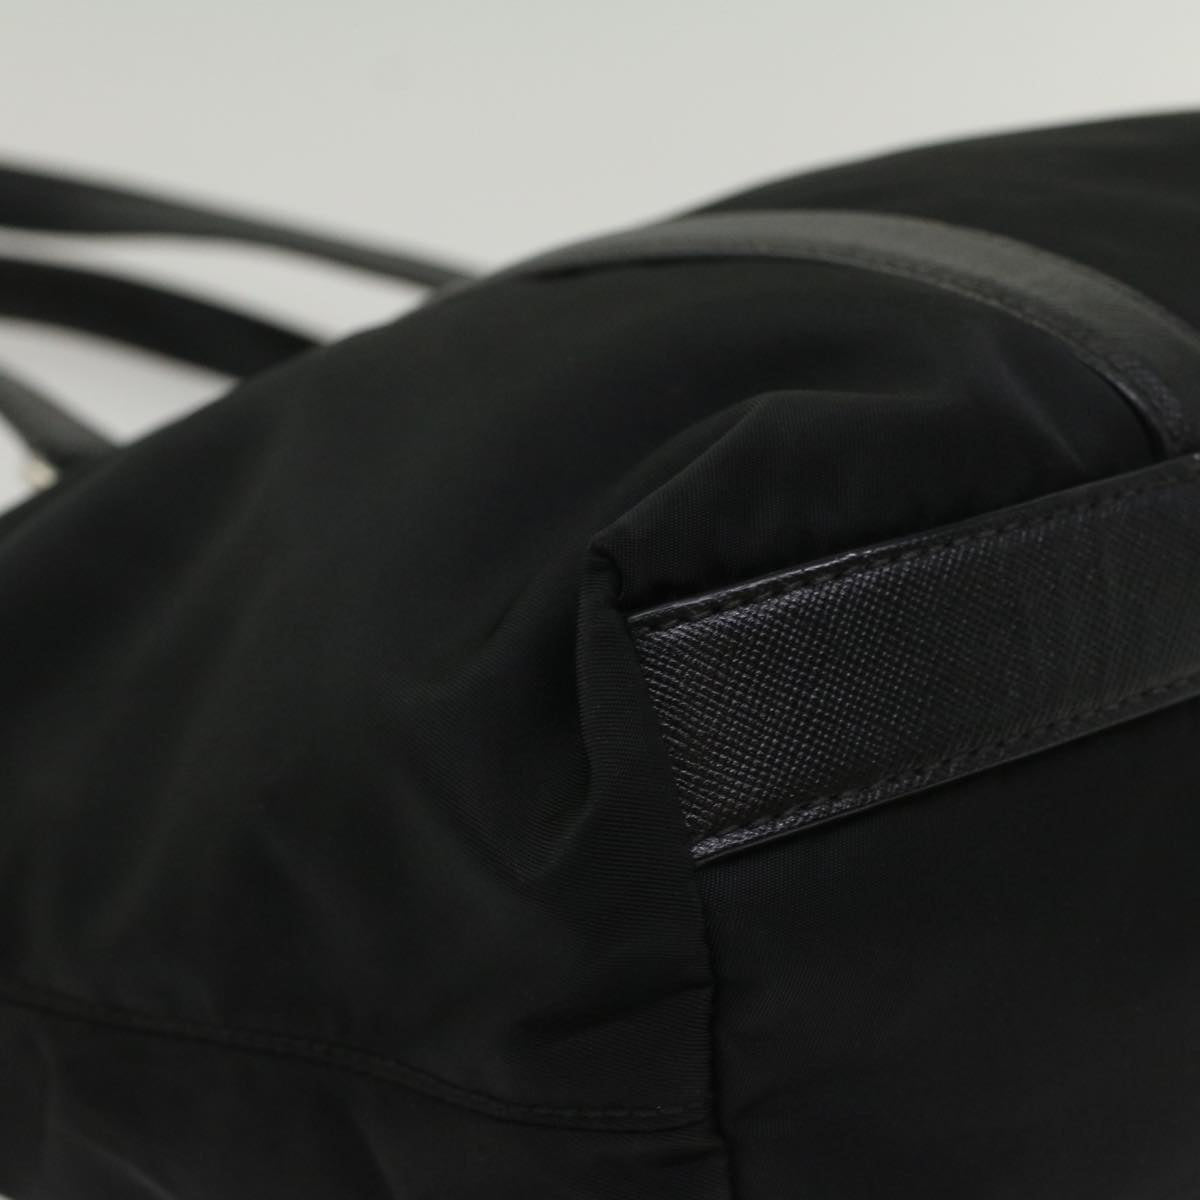 PRADA Tote Bag Nylon Leather Black Auth ar10238